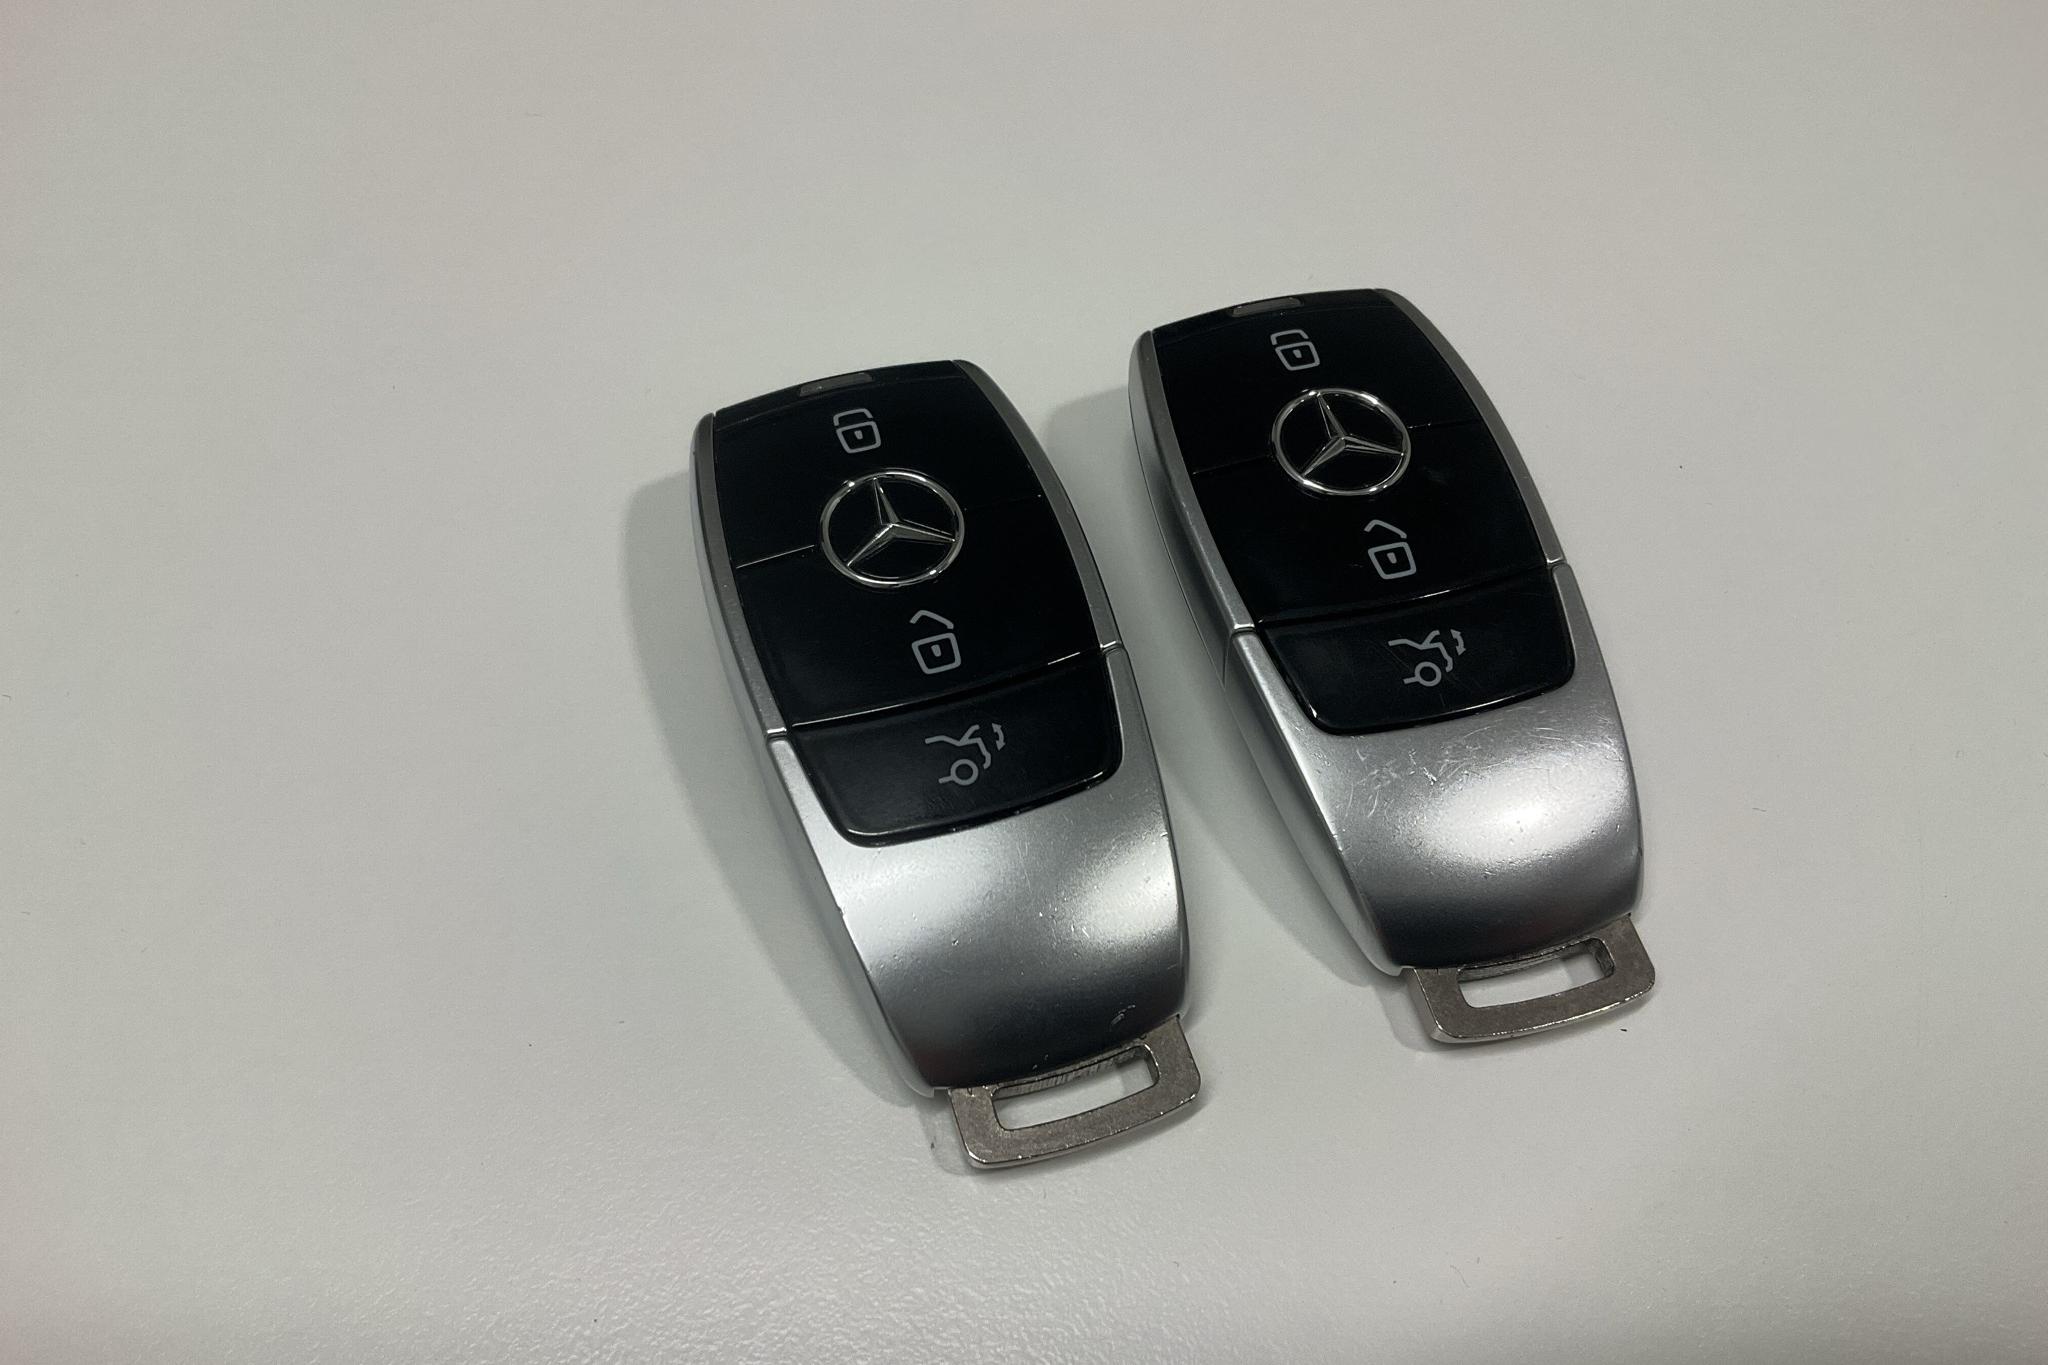 Mercedes E 220 d 4MATIC Kombi All-Terrain S213 (194hk) - 11 762 mil - Automat - silver - 2018